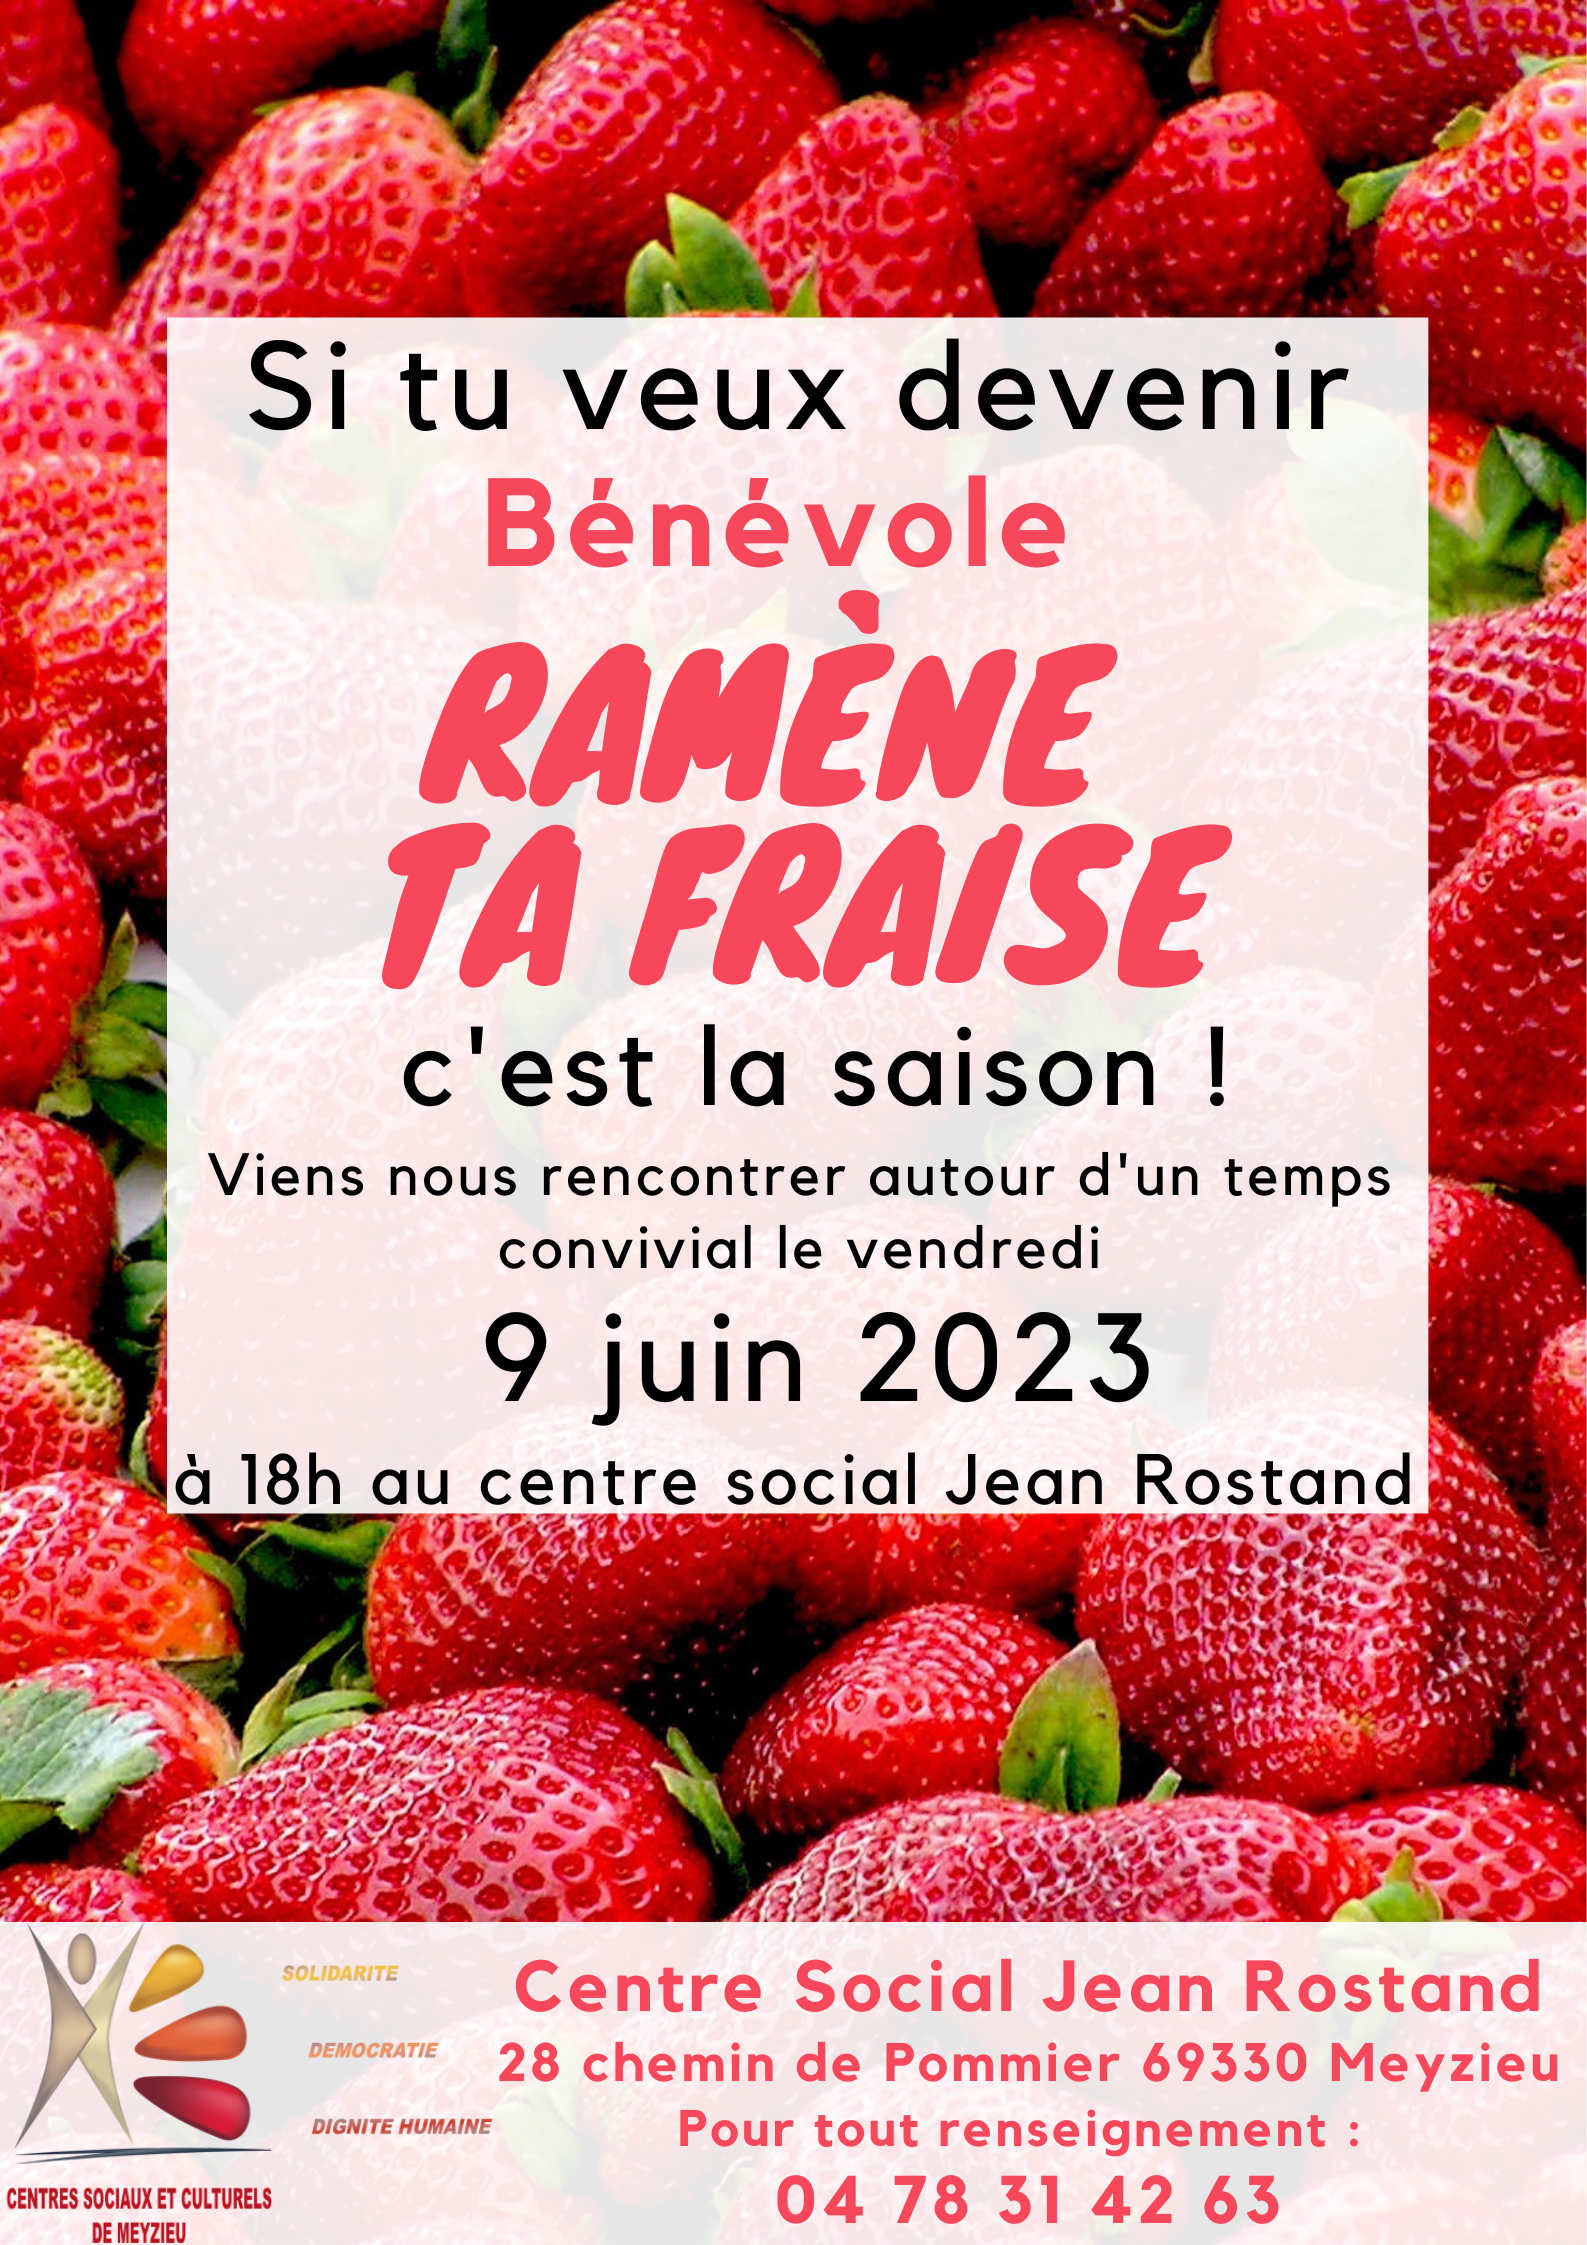 image Bénévole Ramène ta fraise 2023 1